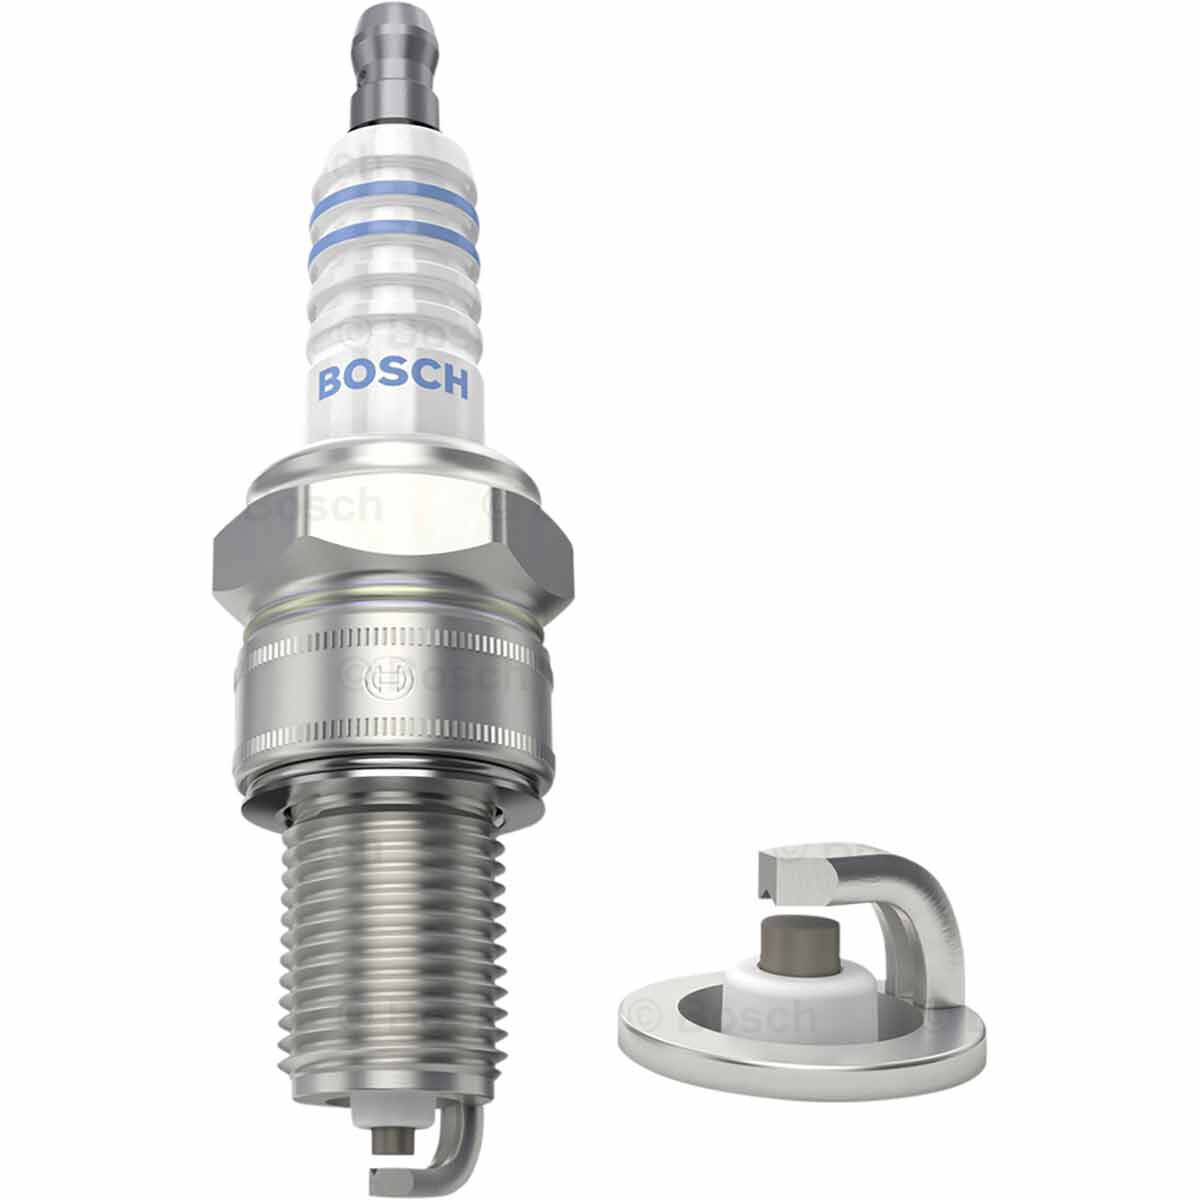 Bosch WR9DC Spark Plug Pack of 1 